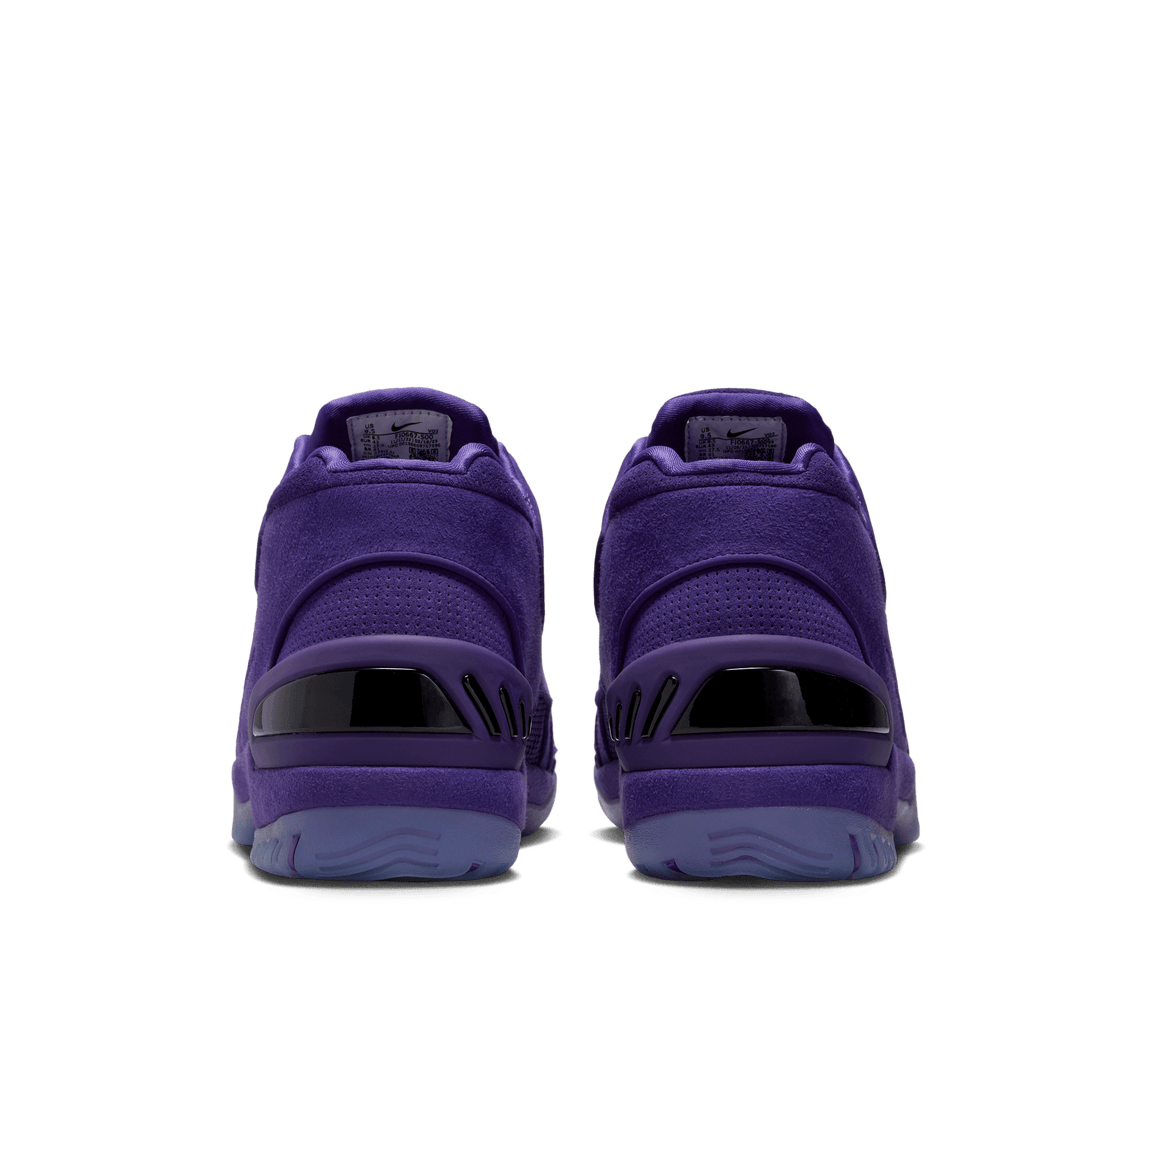 Nike Air Zoom Generation (Court Purple) 6/21 - Nike Air Zoom Generation (Court Purple) 6/21 - 